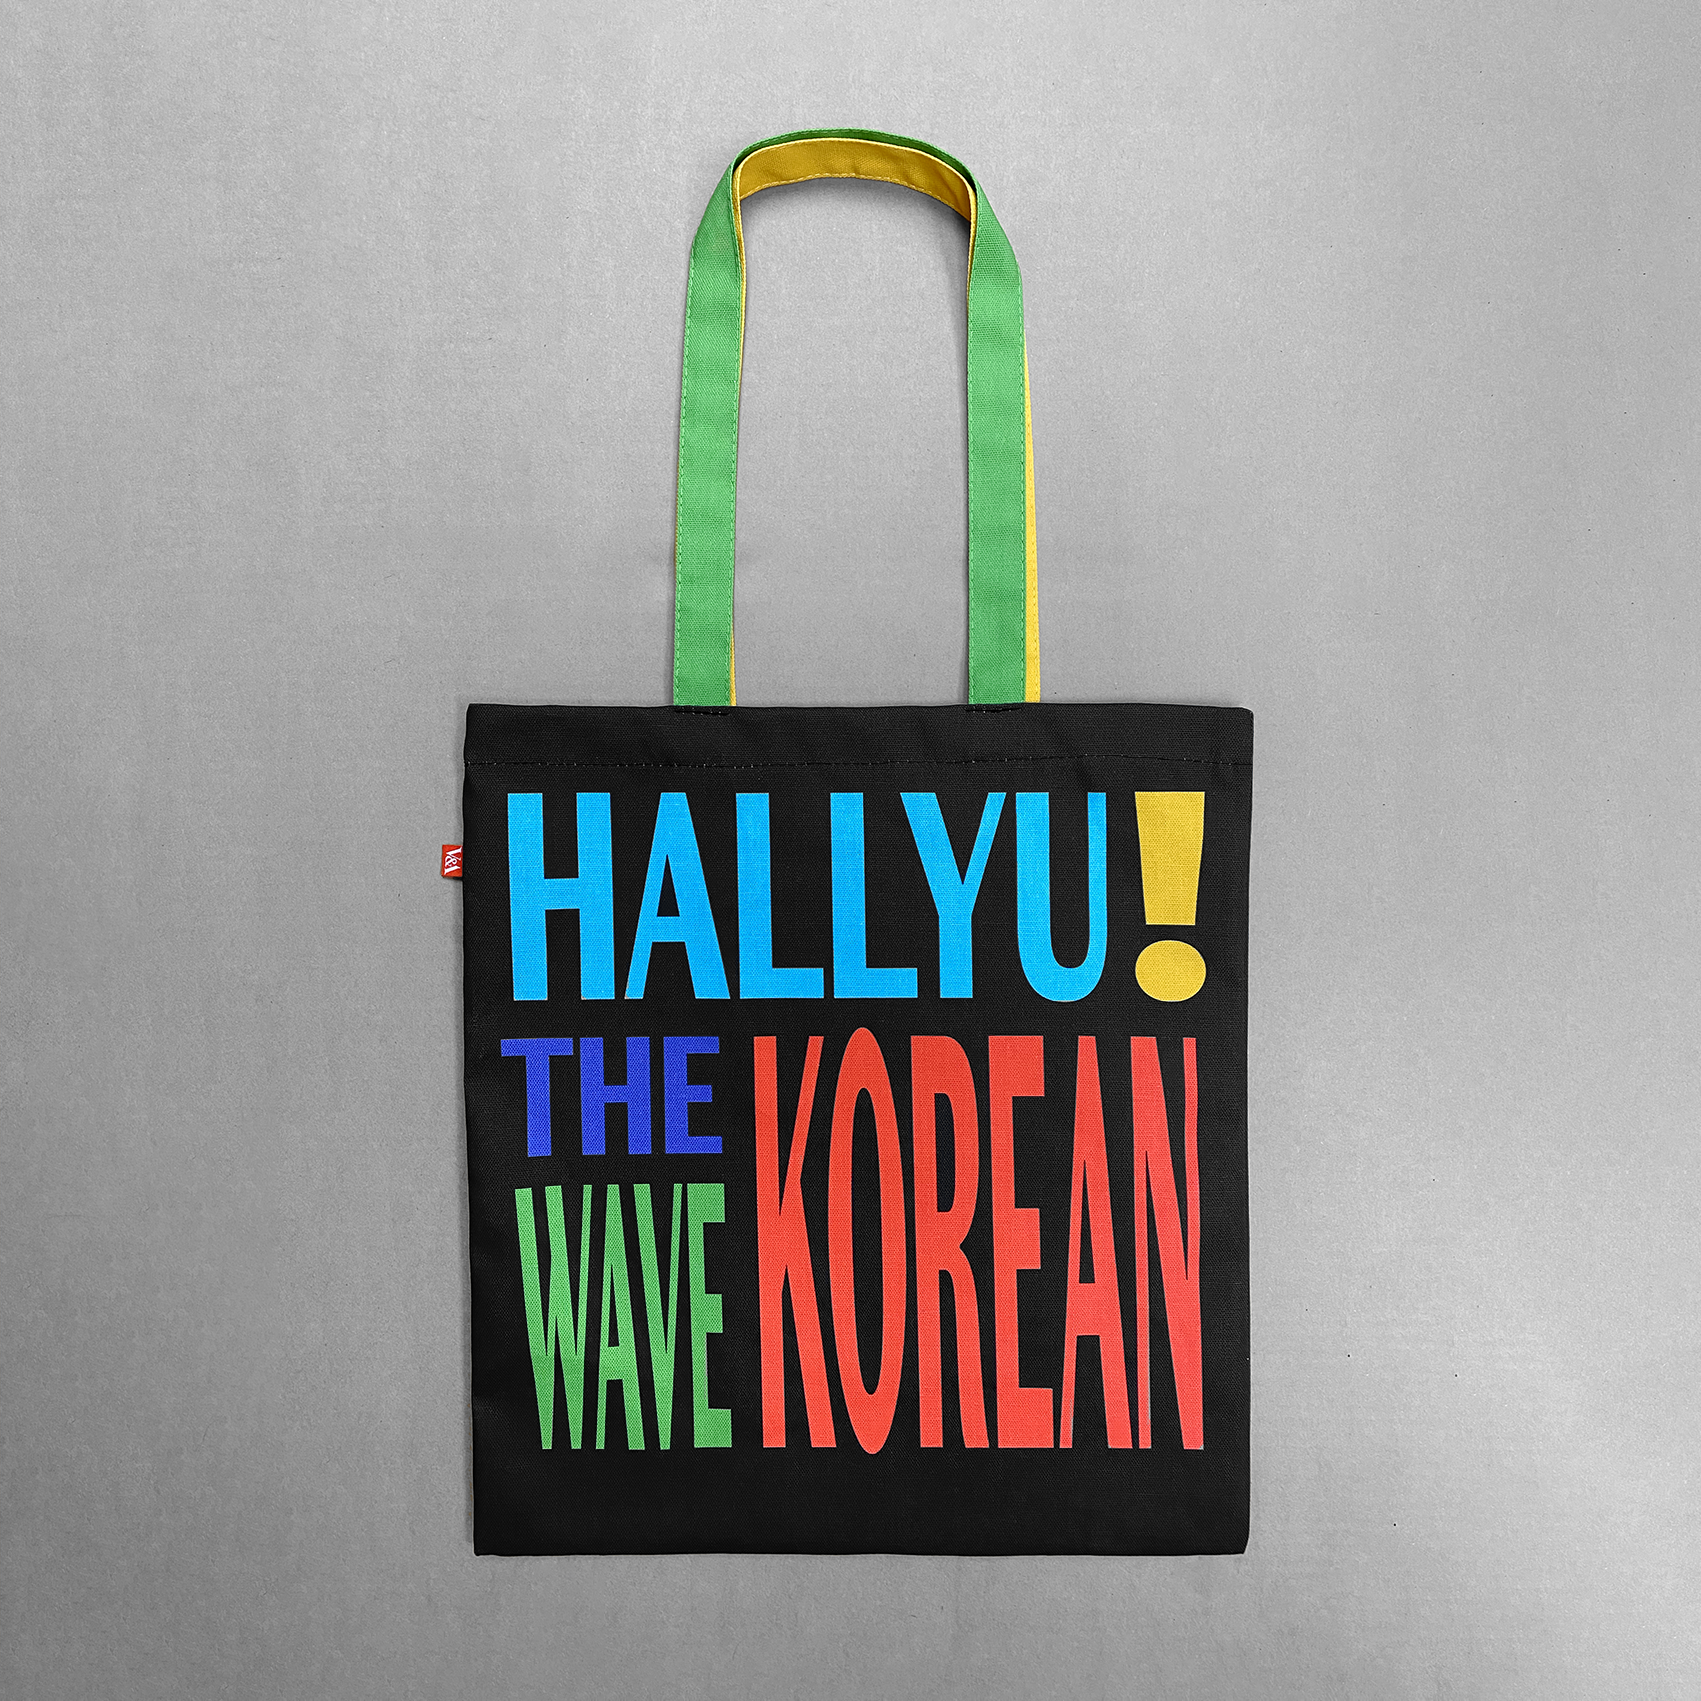 Hallyu! The Korean Wave book bag printed by paul bristow in the uk